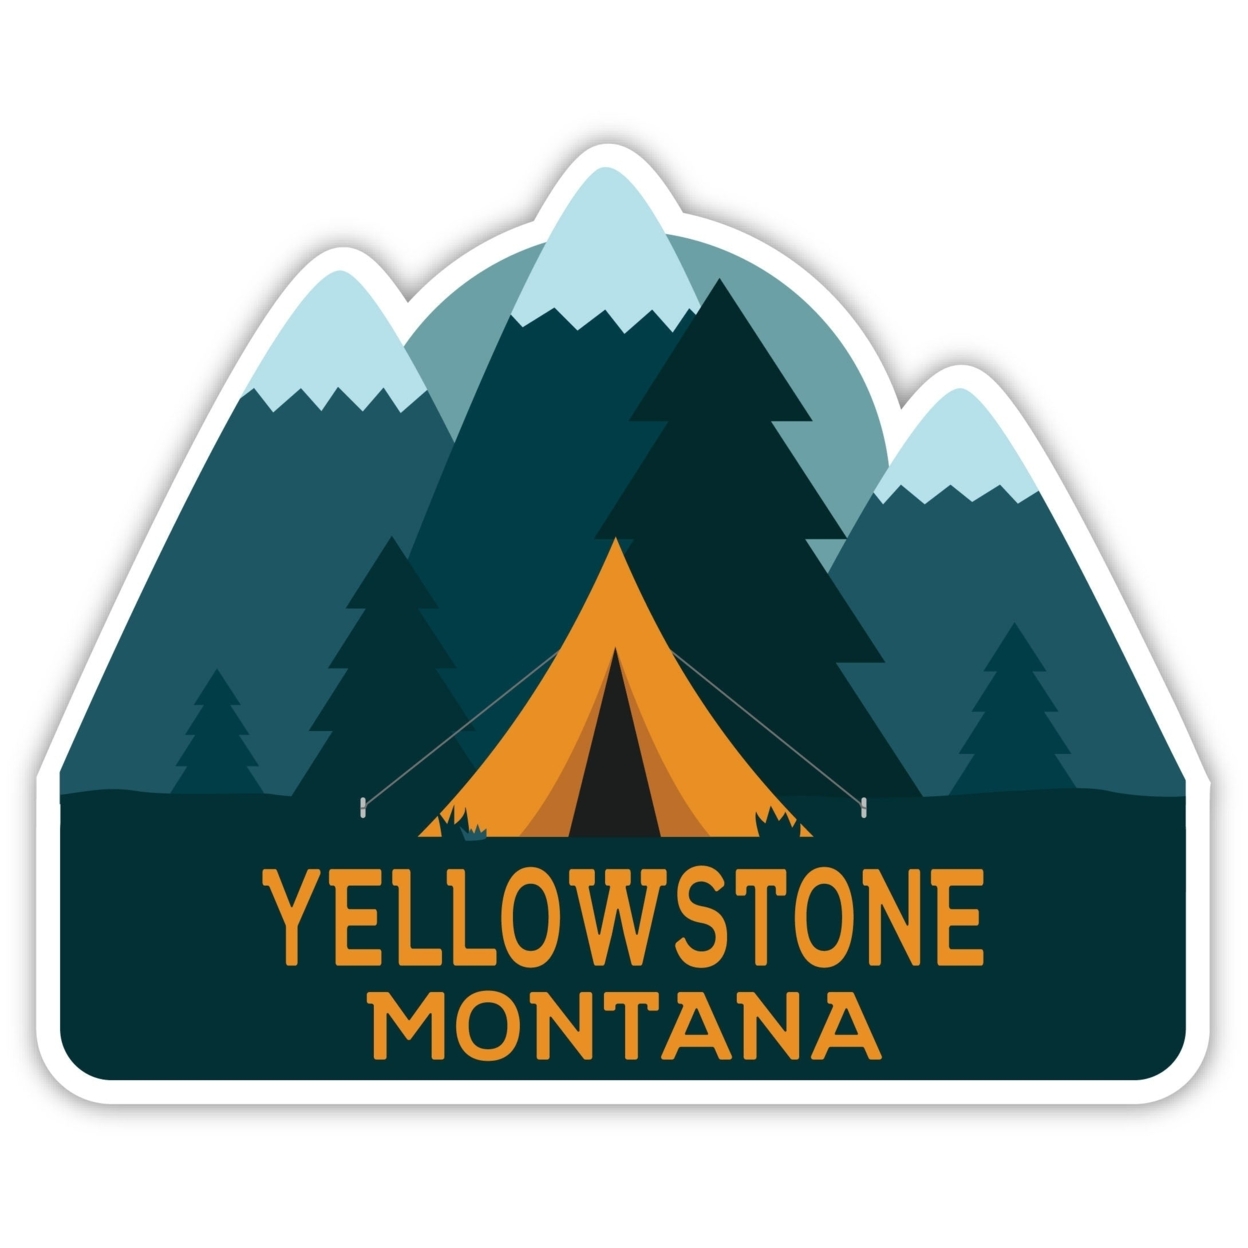 Yellowstone Montana Souvenir Decorative Stickers (Choose Theme And Size) - Single Unit, 4-Inch, Tent